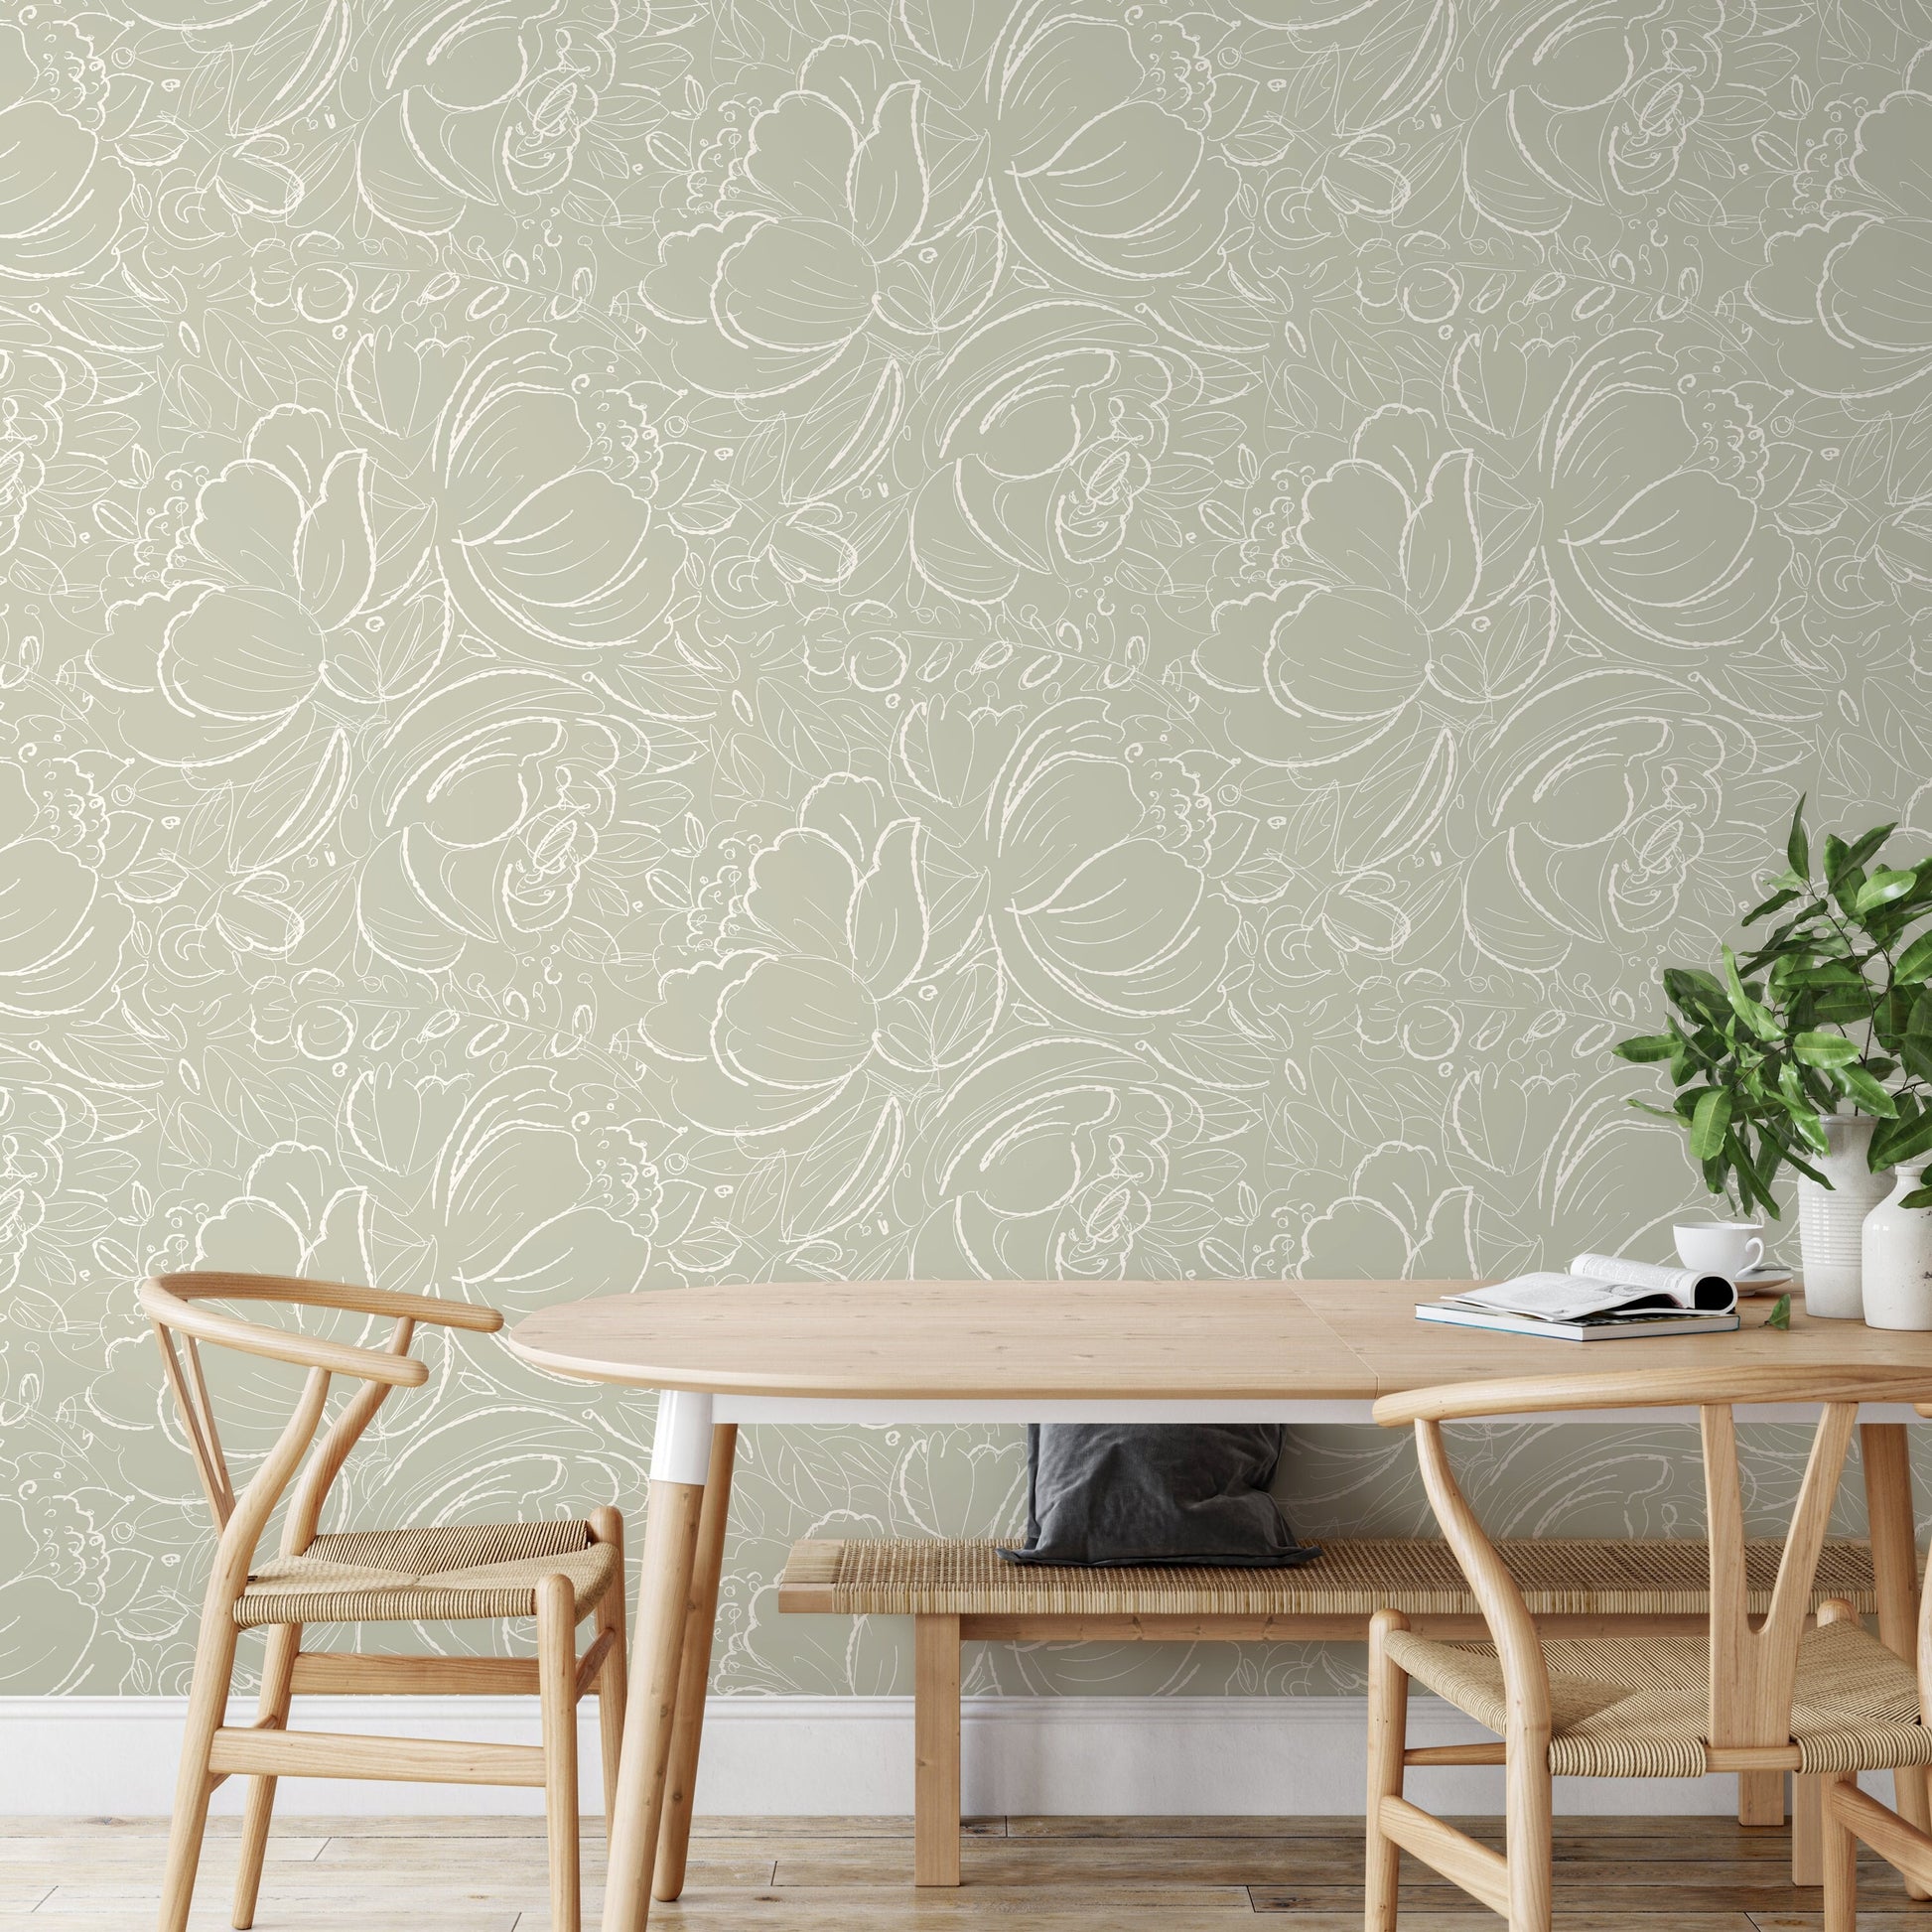 Green Floral Hand Drawing Wallpaper / Peel and Stick Wallpaper Removable Wallpaper Home Decor Wall Art Wall Decor Room Decor - D055